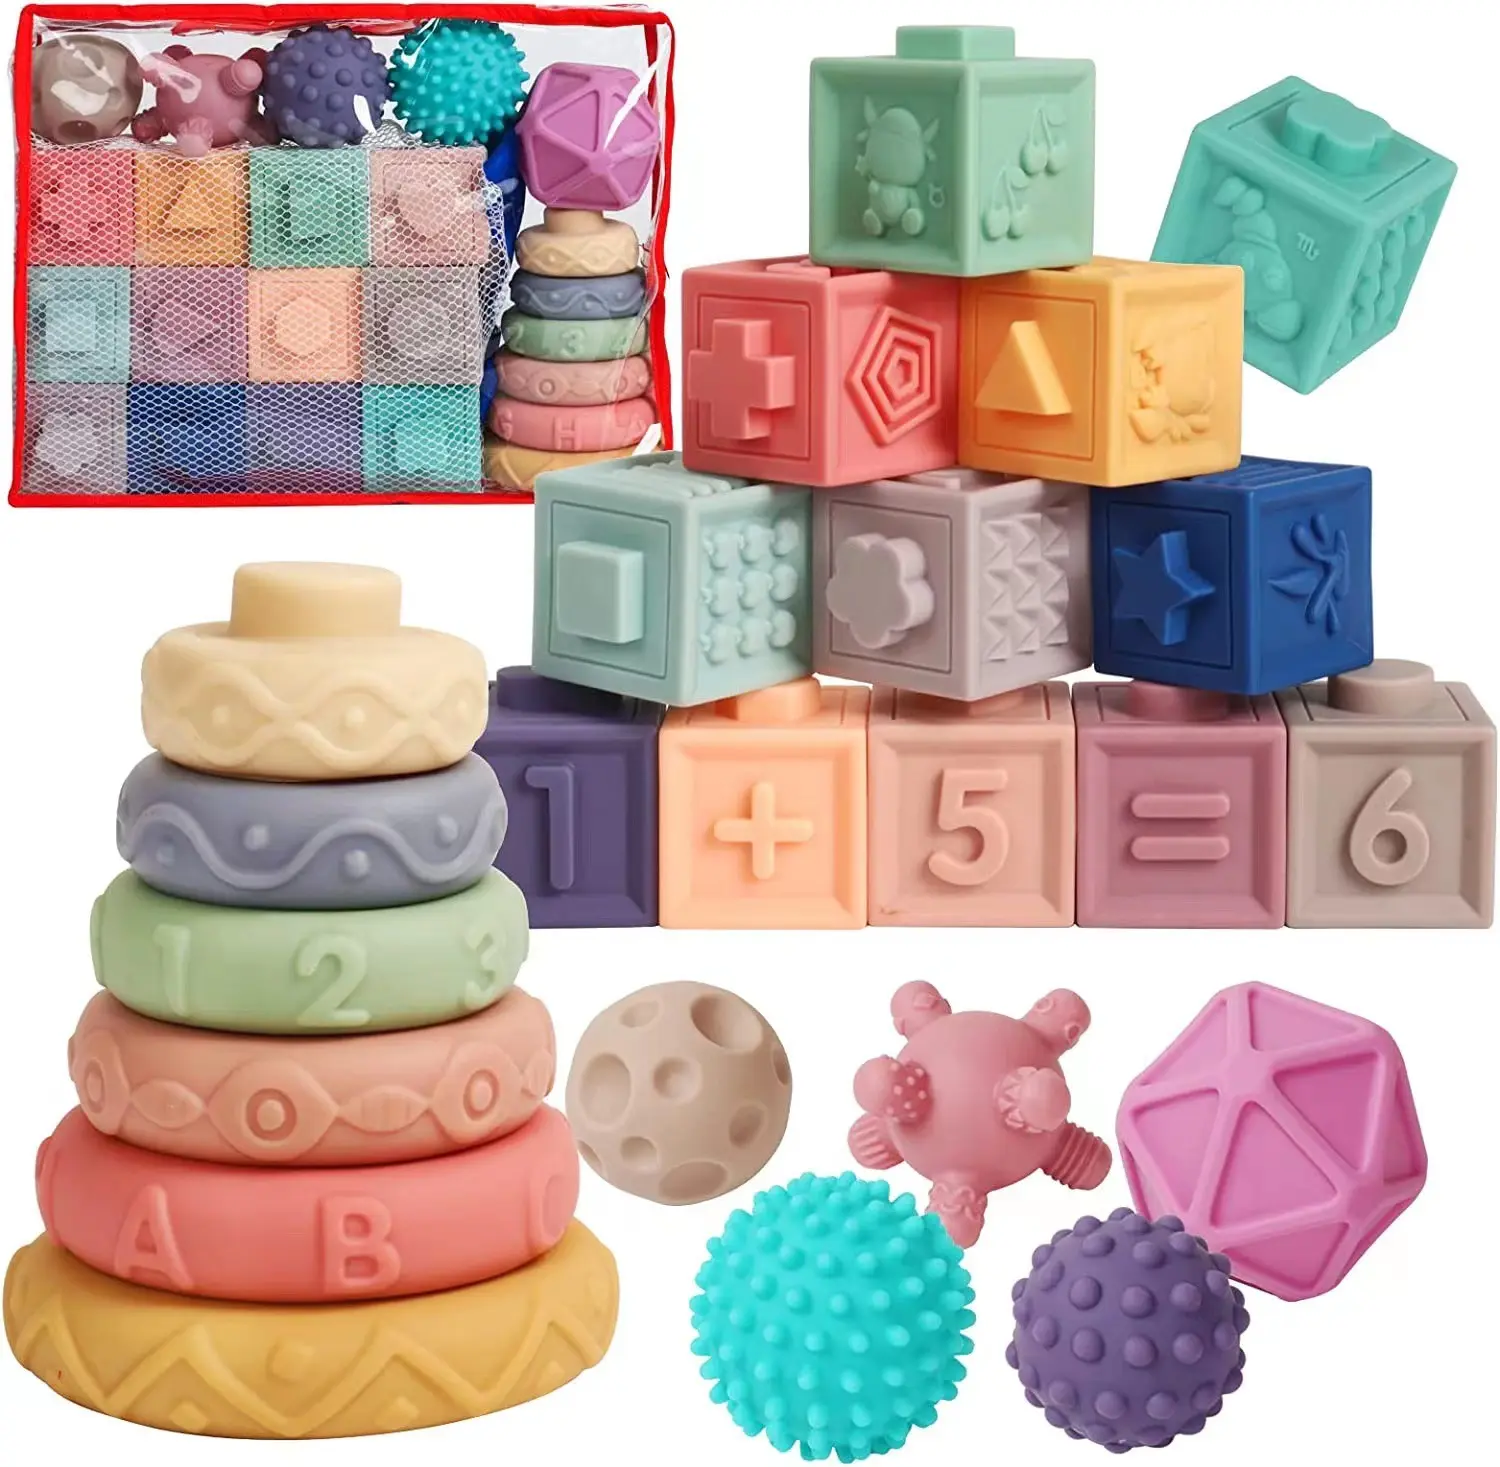 Recién llegado, juguetes de dentición de silicona suave para bebés, bloques de construcción apilables para bebés de 0 a 6 meses, juguetes educativos de desarrollo sensorial